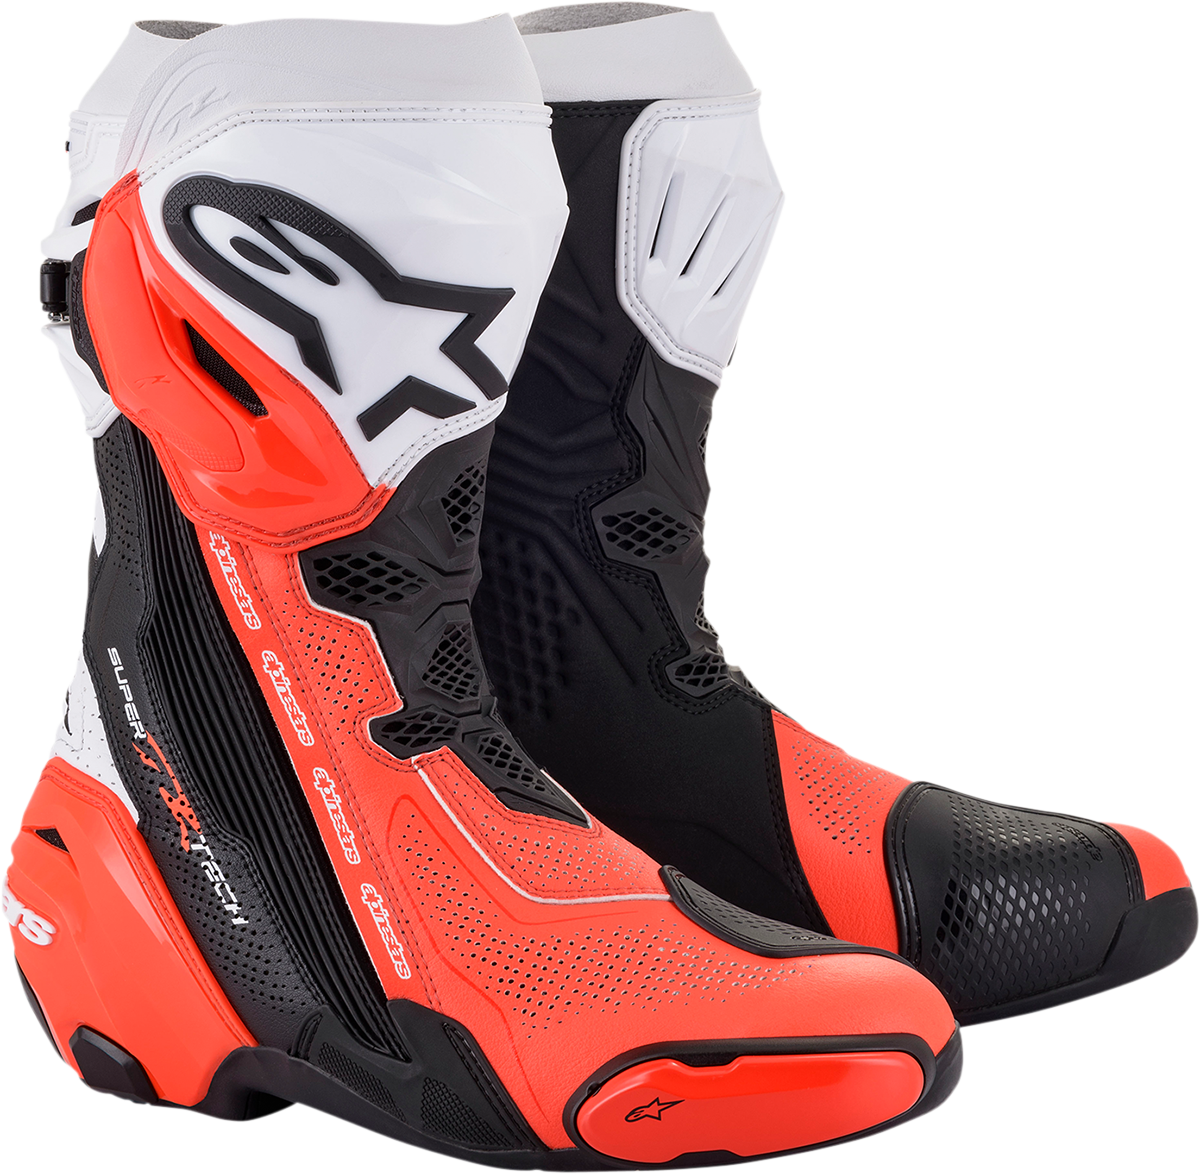 ALPINESTARS Supertech V Boots - Black/Fluo Red/White - US 9 / EU 43 2220121-124-43